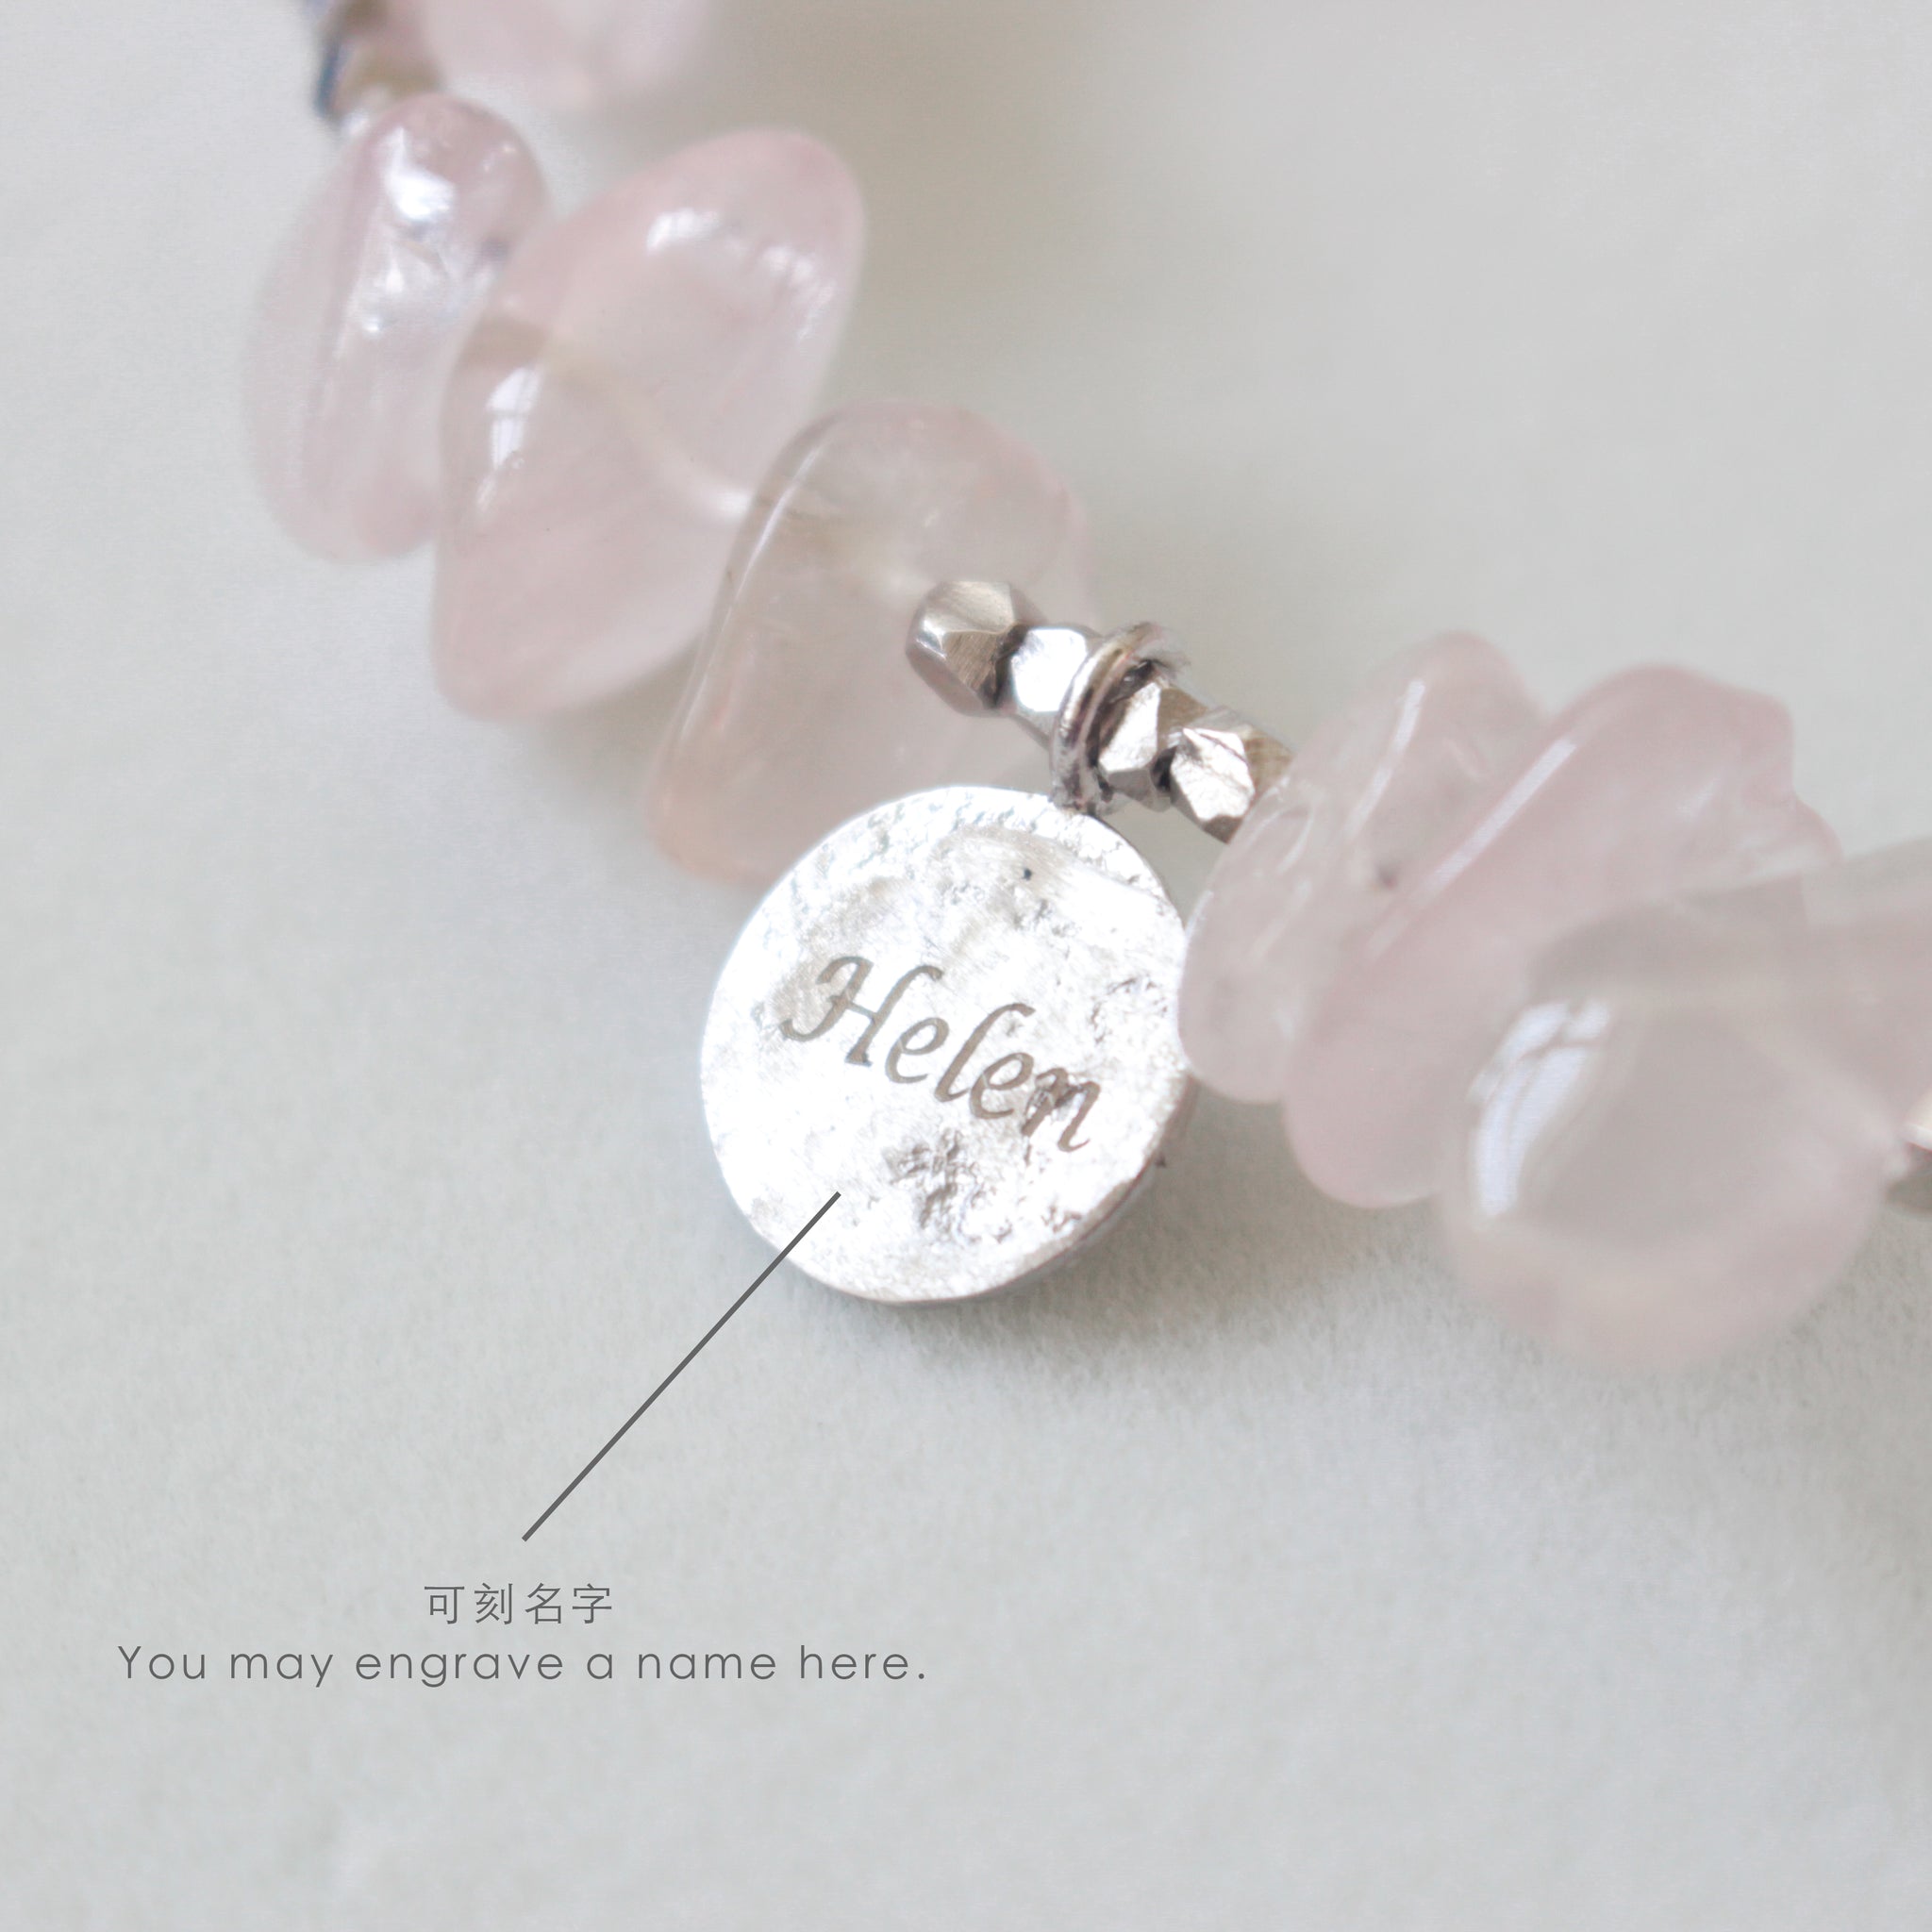 Make A Wish Bracelet - Rose Quartz with Engraved Silver Charm Elastic Bracelet